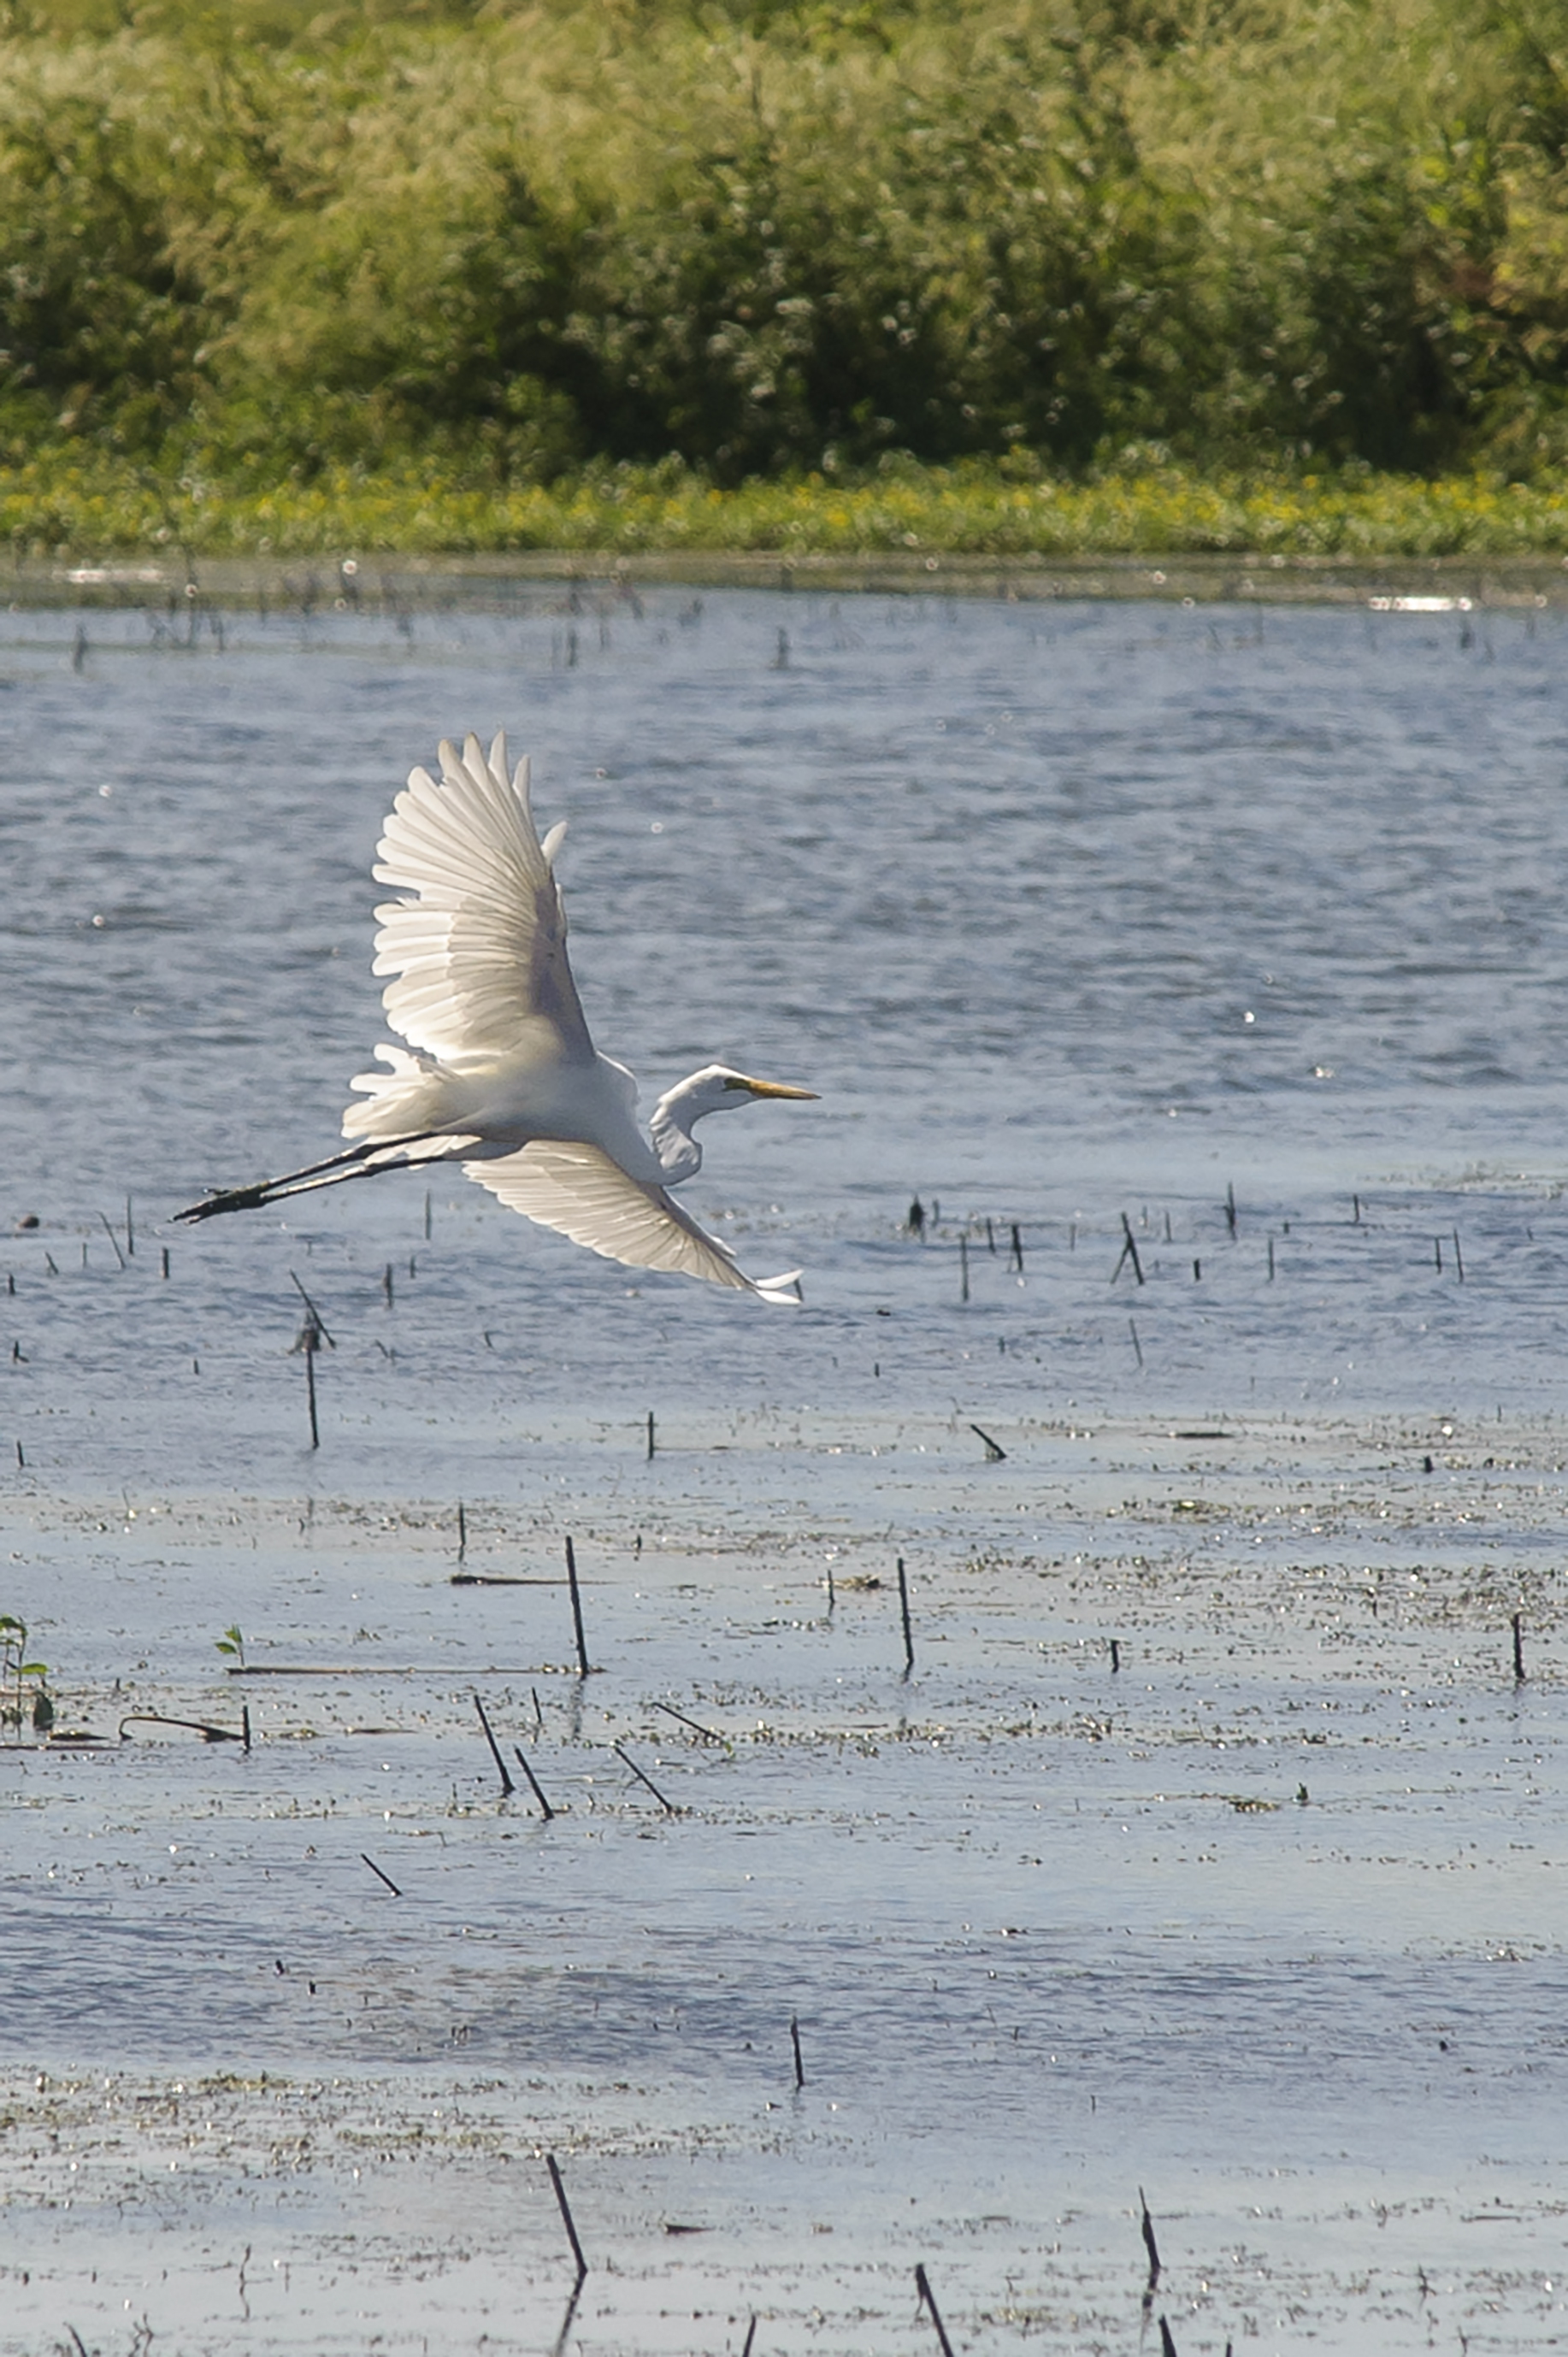 An egret flying over a wetland.